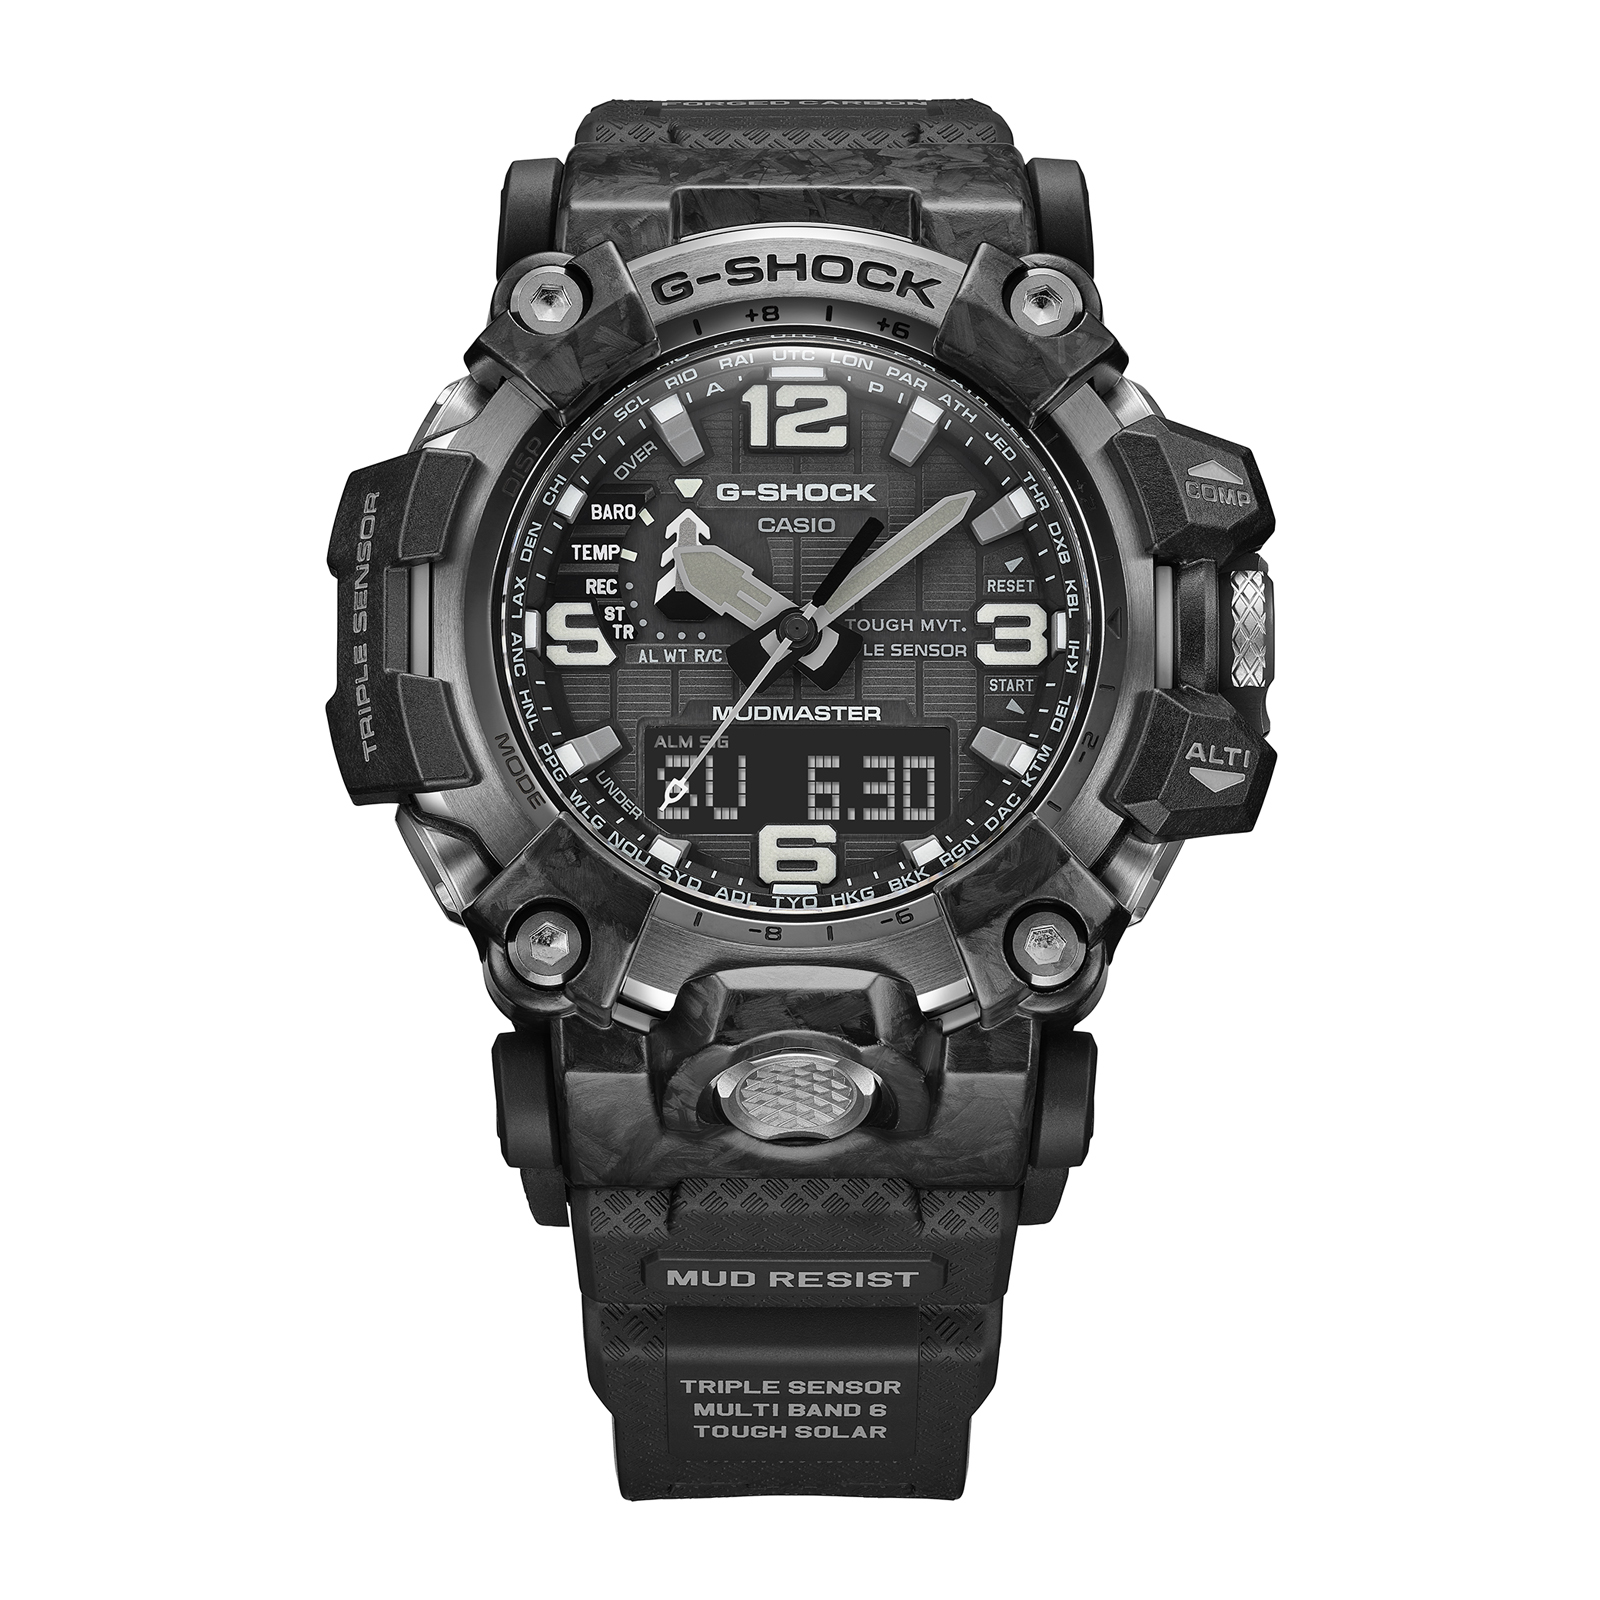 Reloj G-SHOCK GWG-2000-1A1DR Resina/Acero Hombre Negro